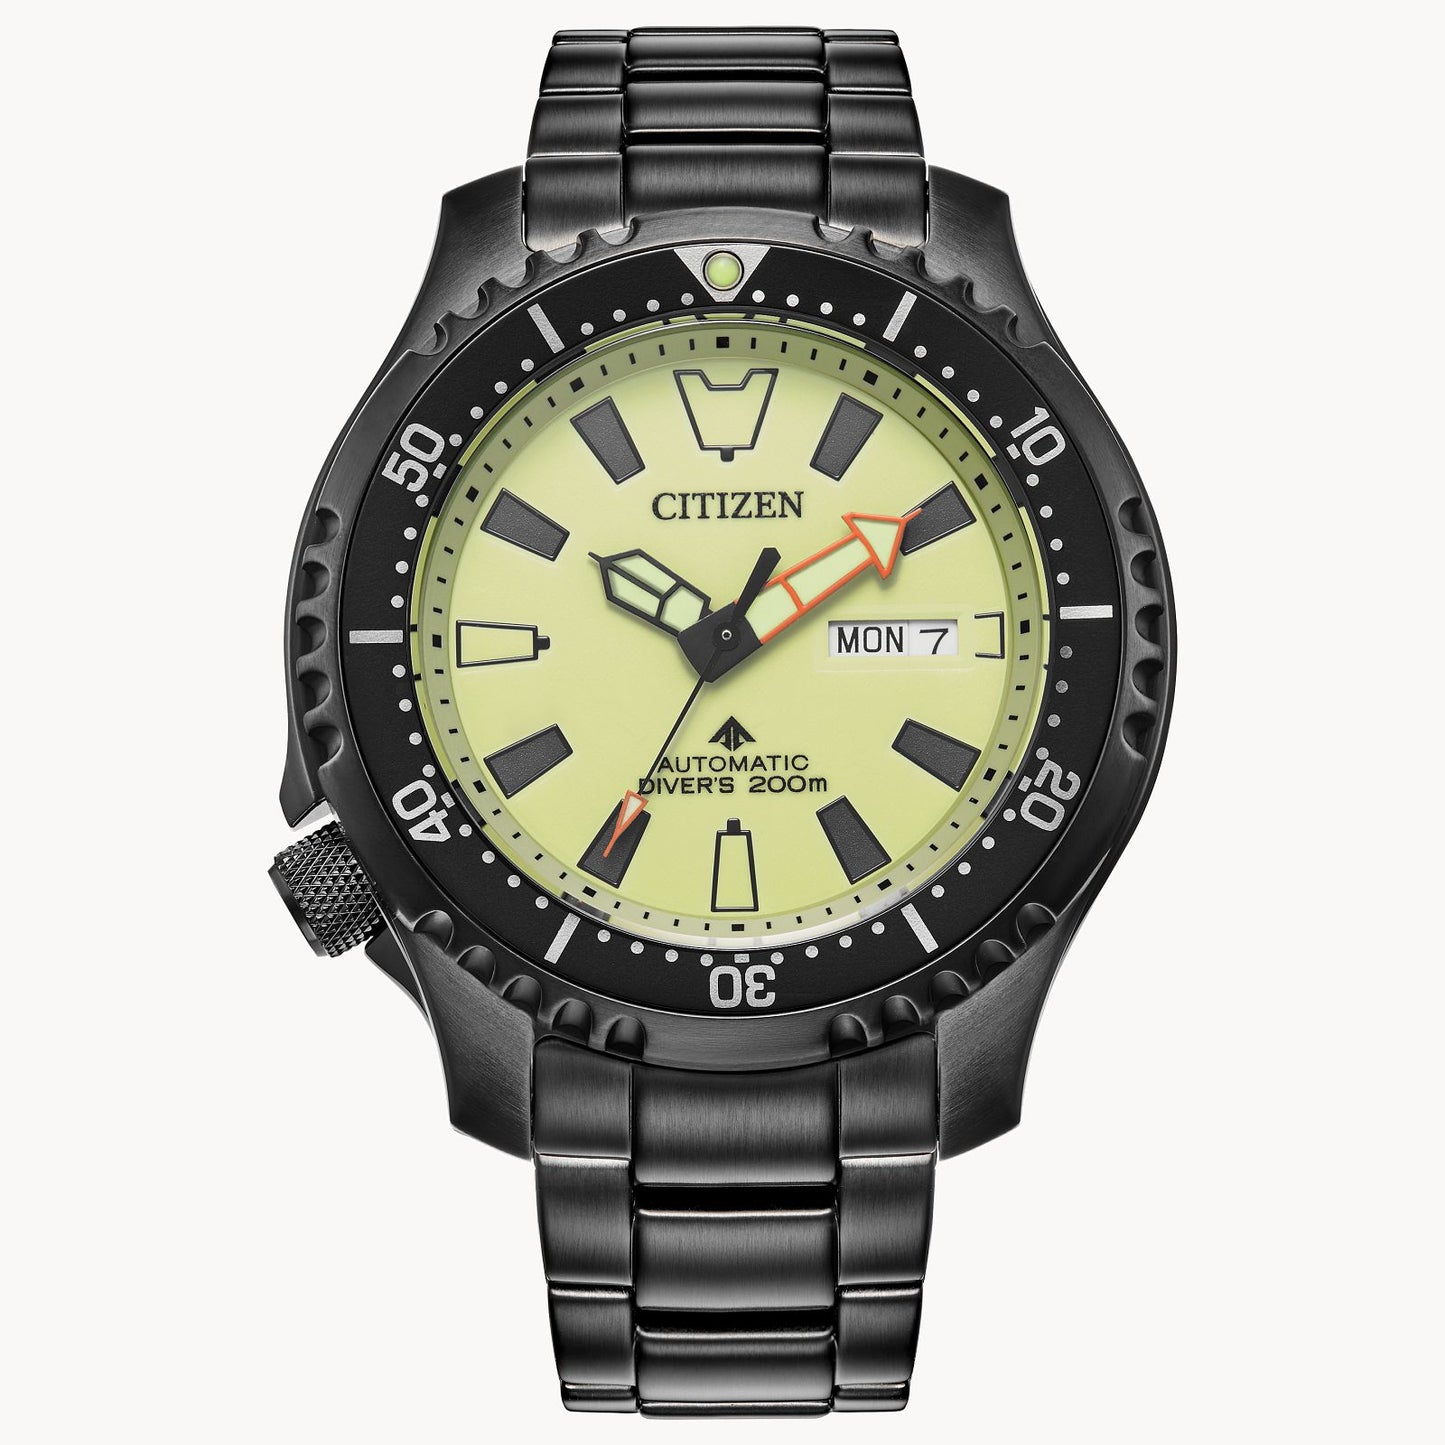 Citizen Promaster Dive Automatic Premium watch